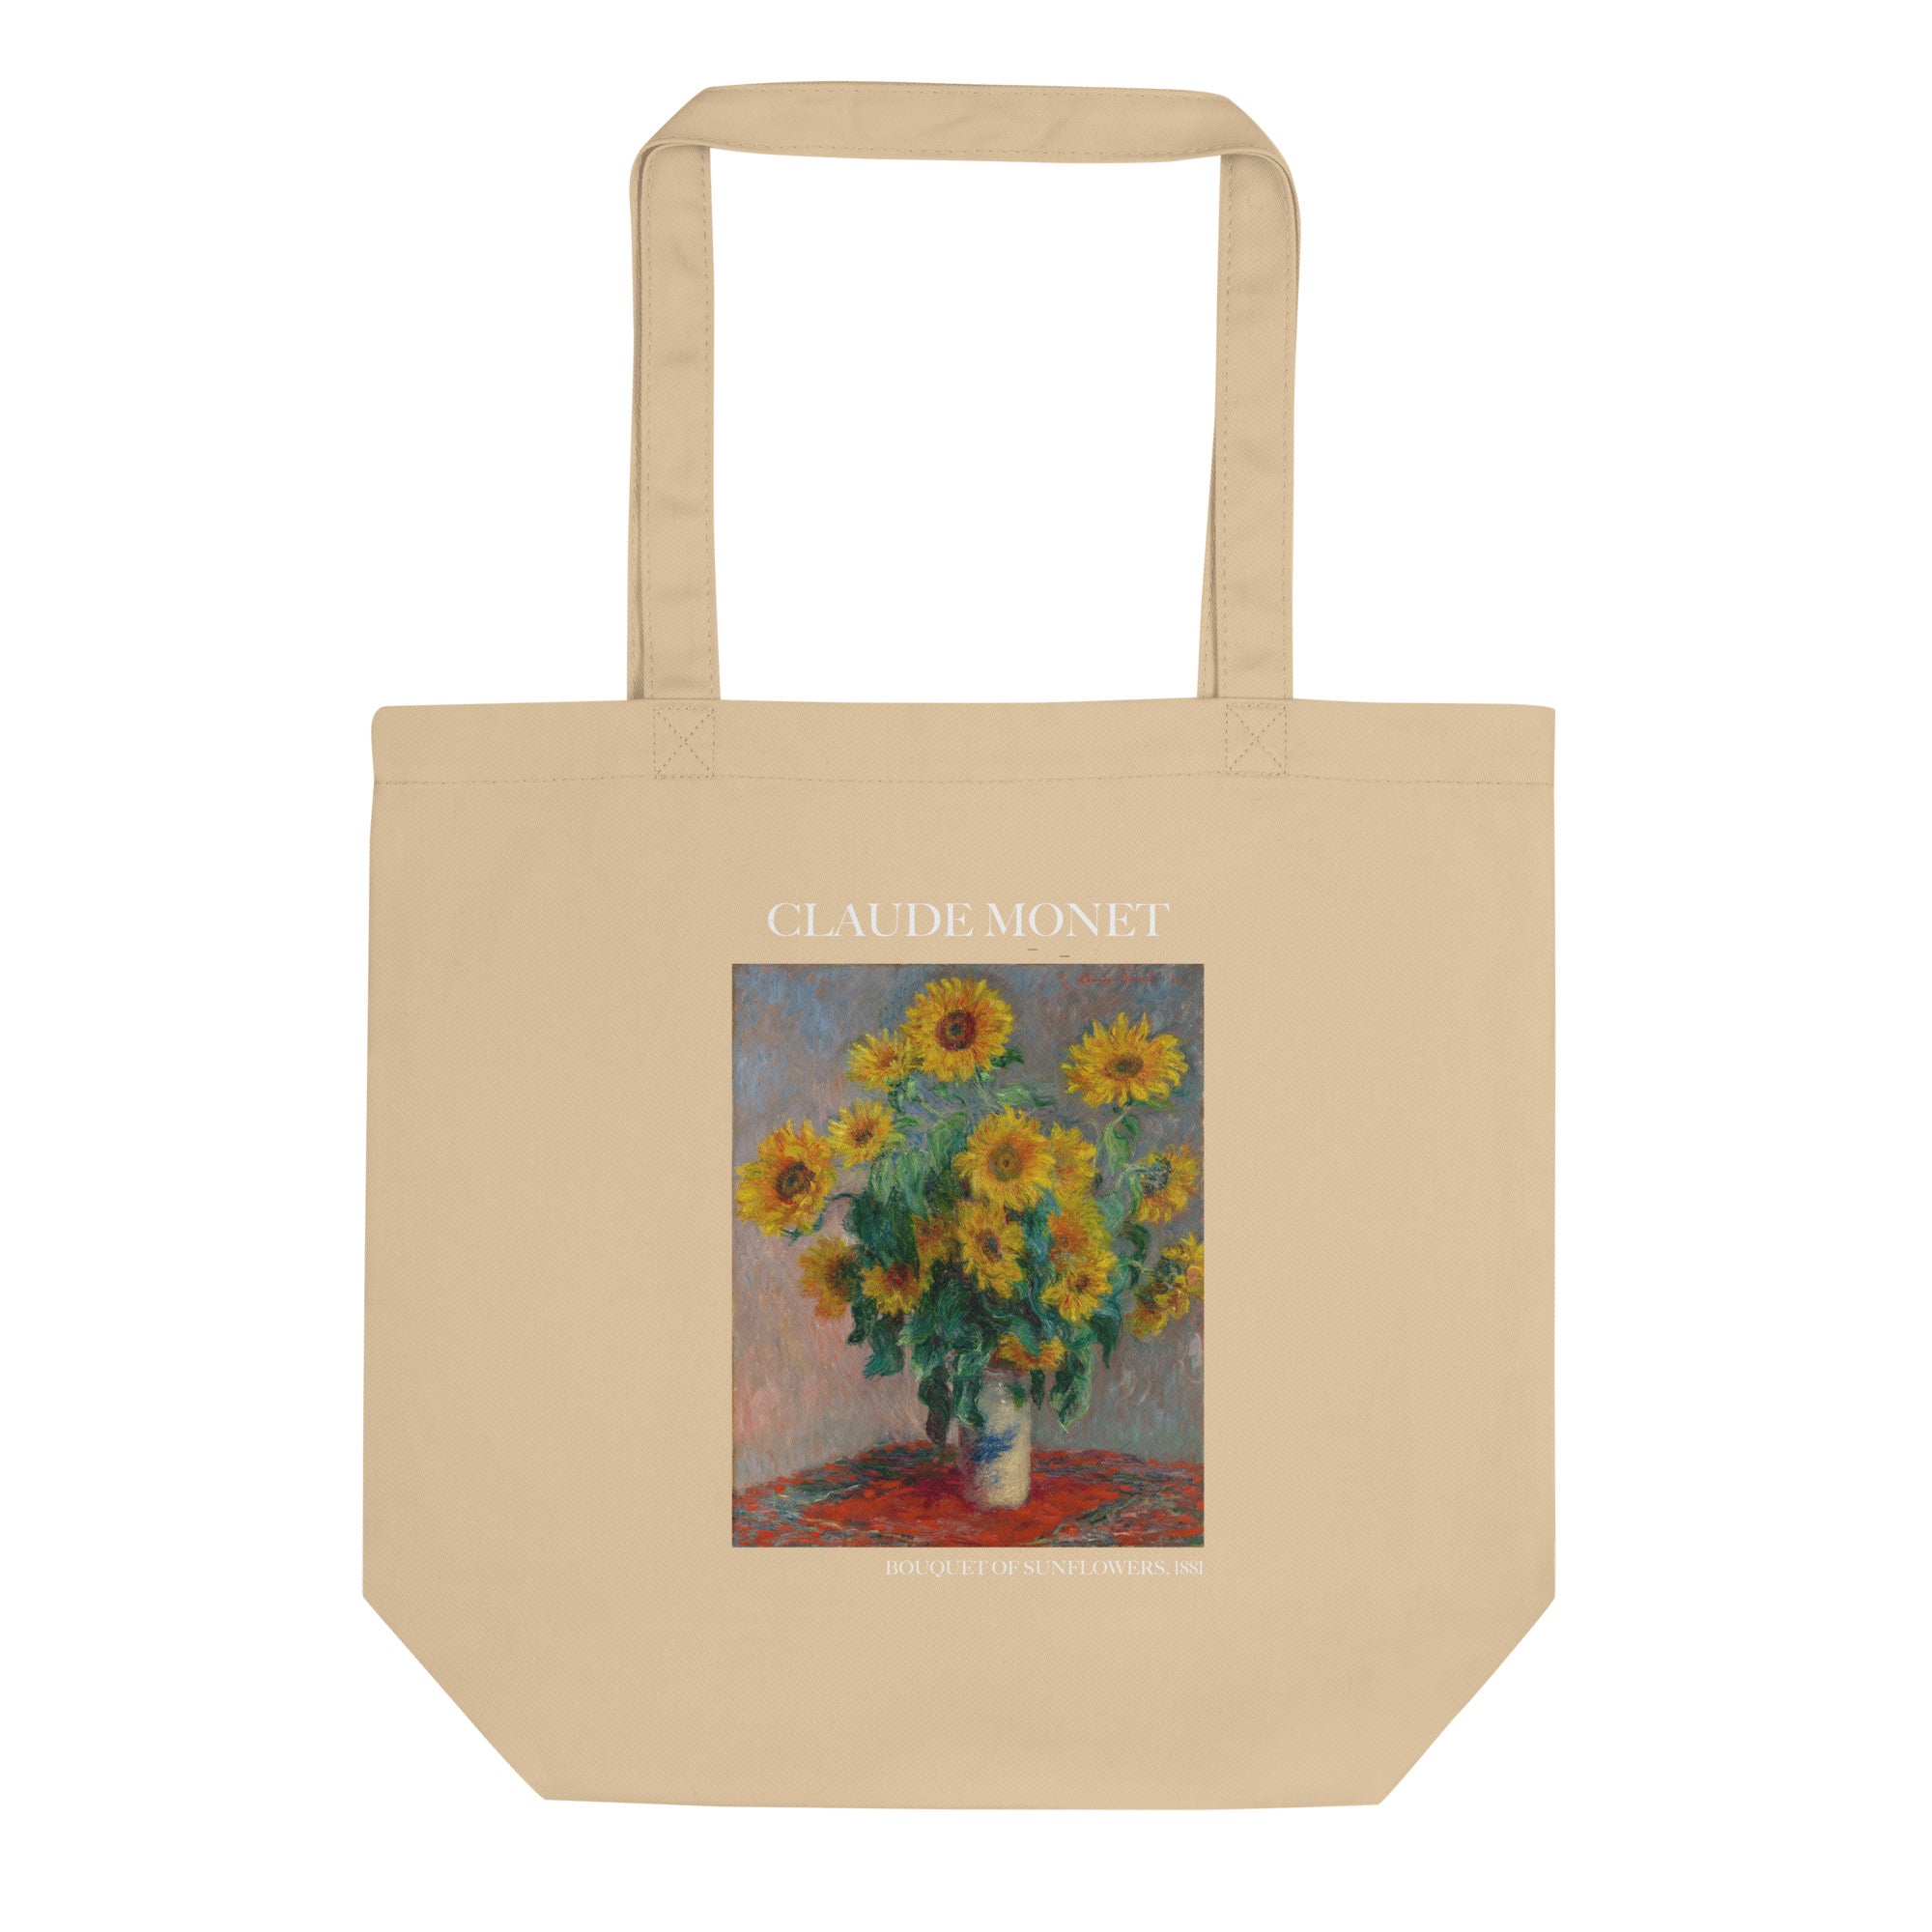 Claude Monet 'Bouquet of Sunflowers' Famous Painting Totebag | Eco Friendly Art Tote Bag